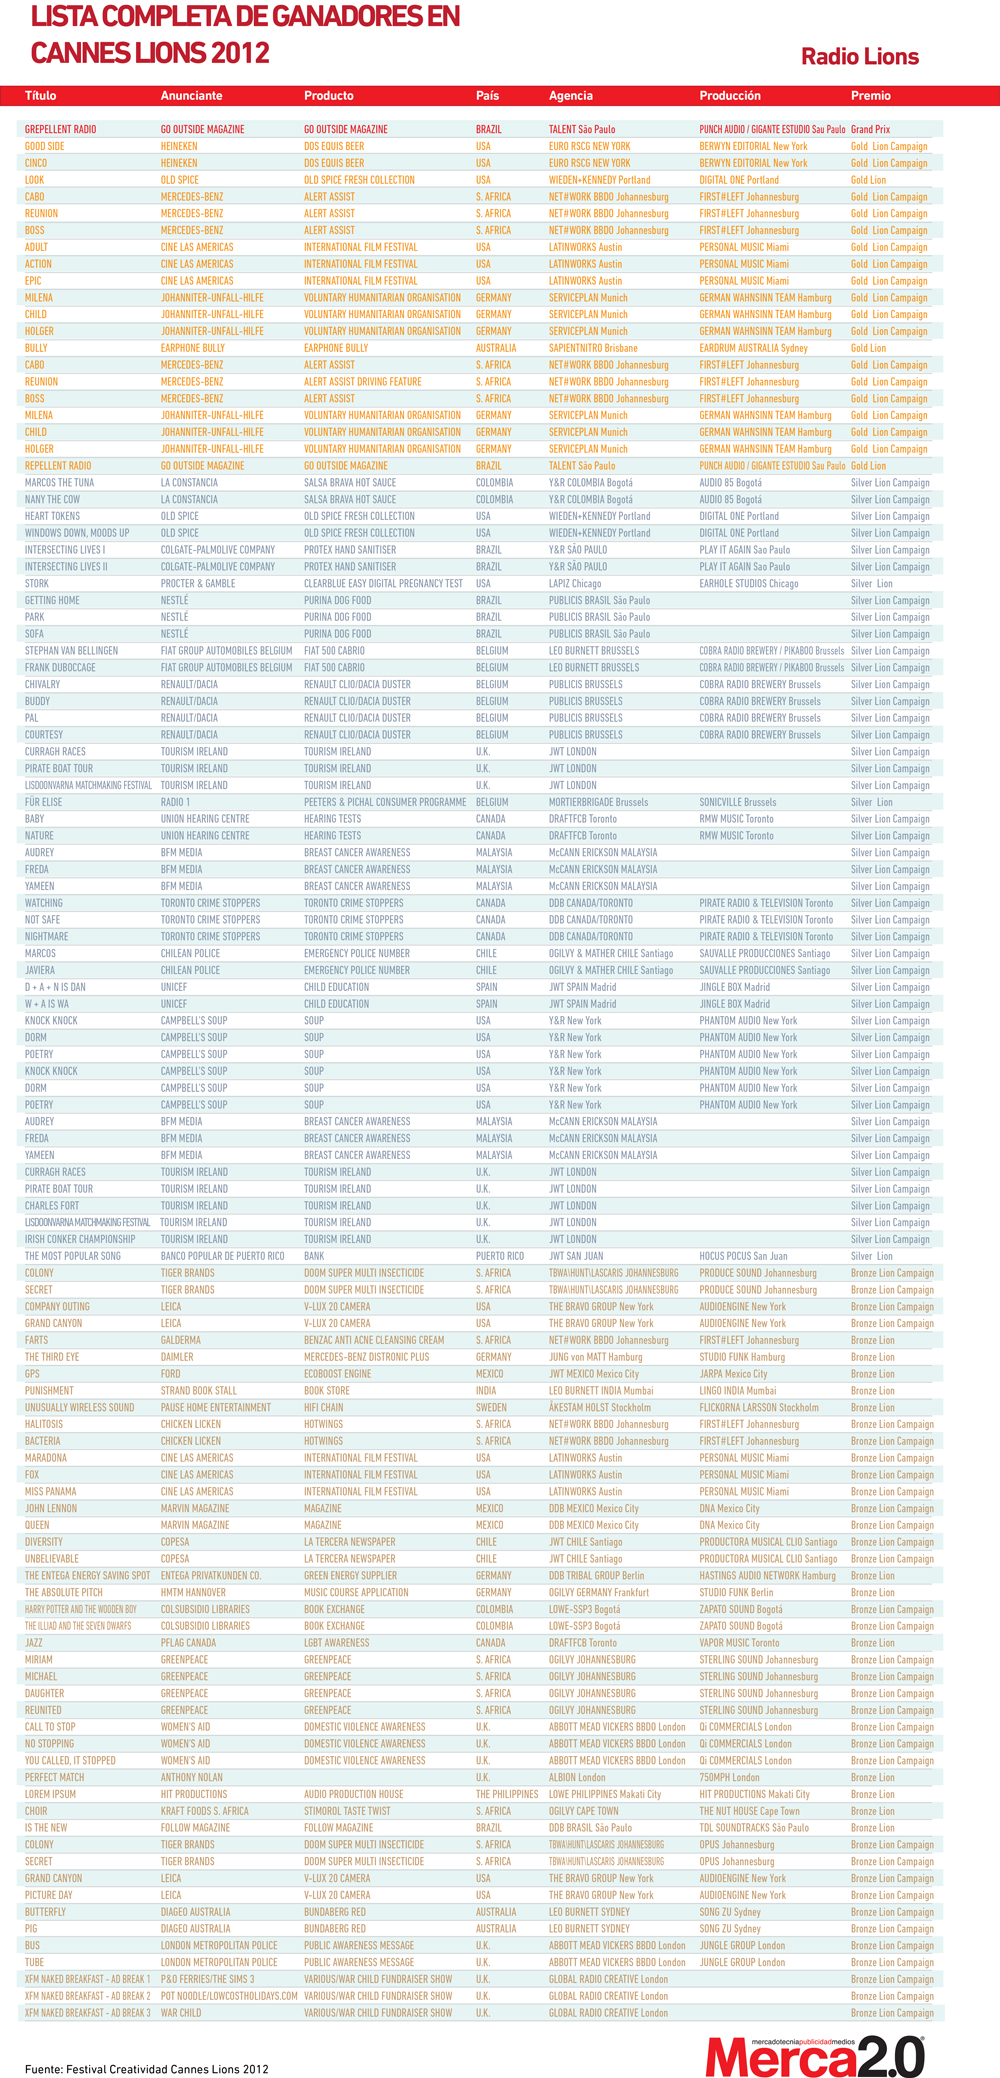 Lista completa de ganadores Cannes Design Lions 2012